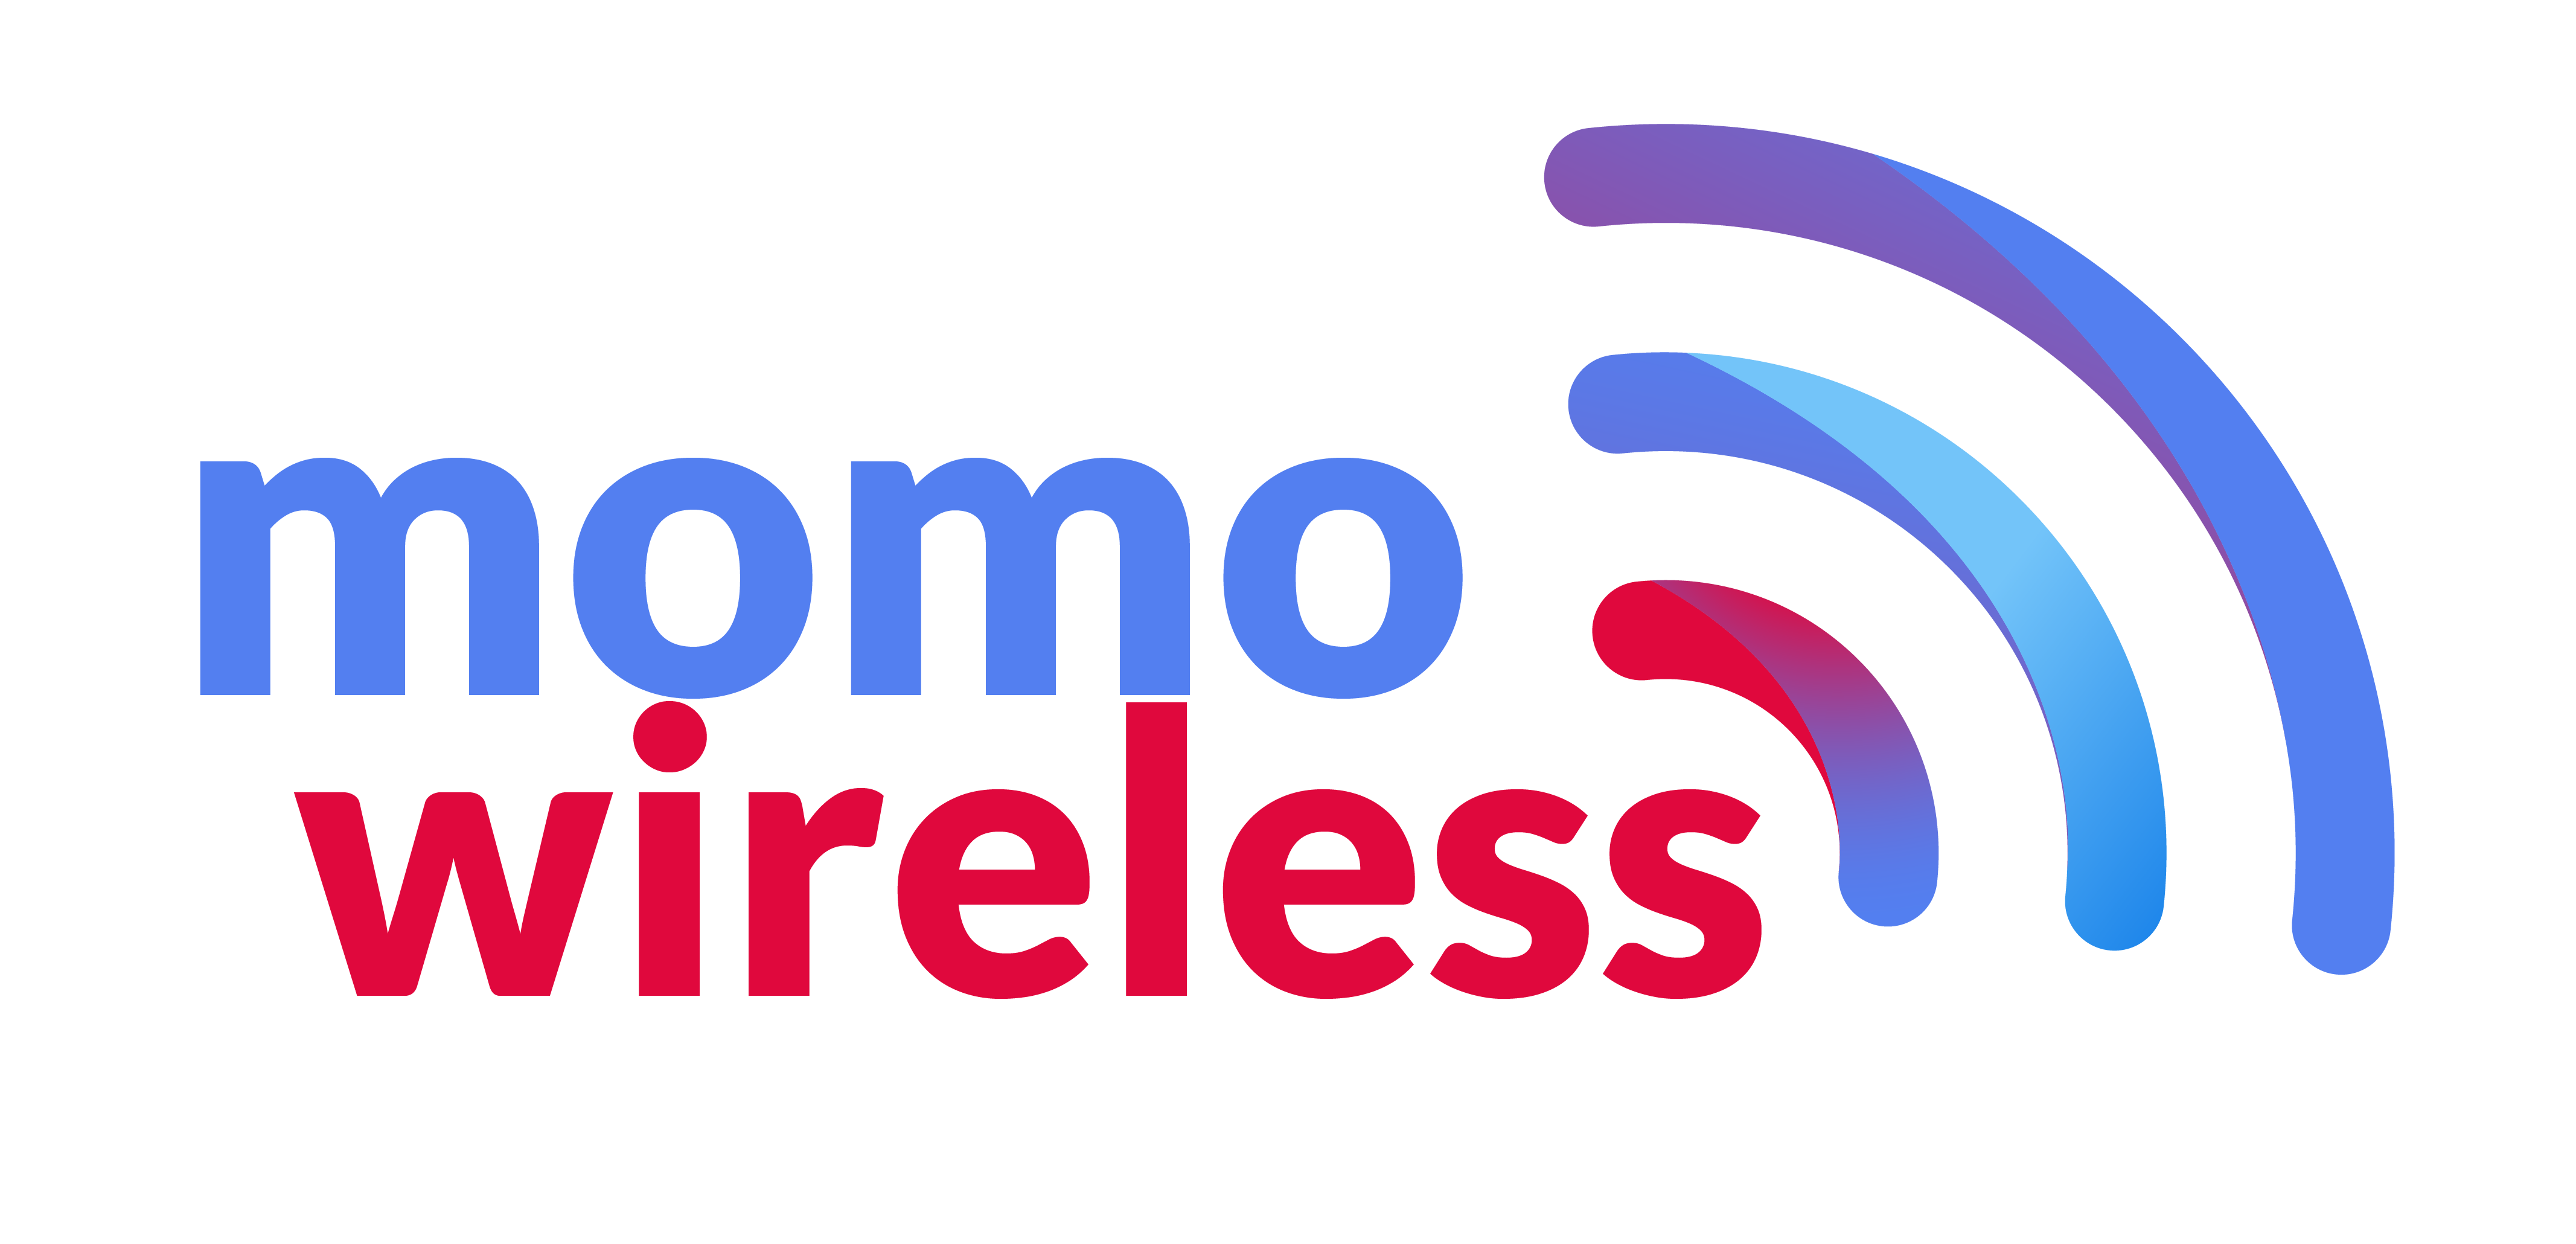 Momo wireless